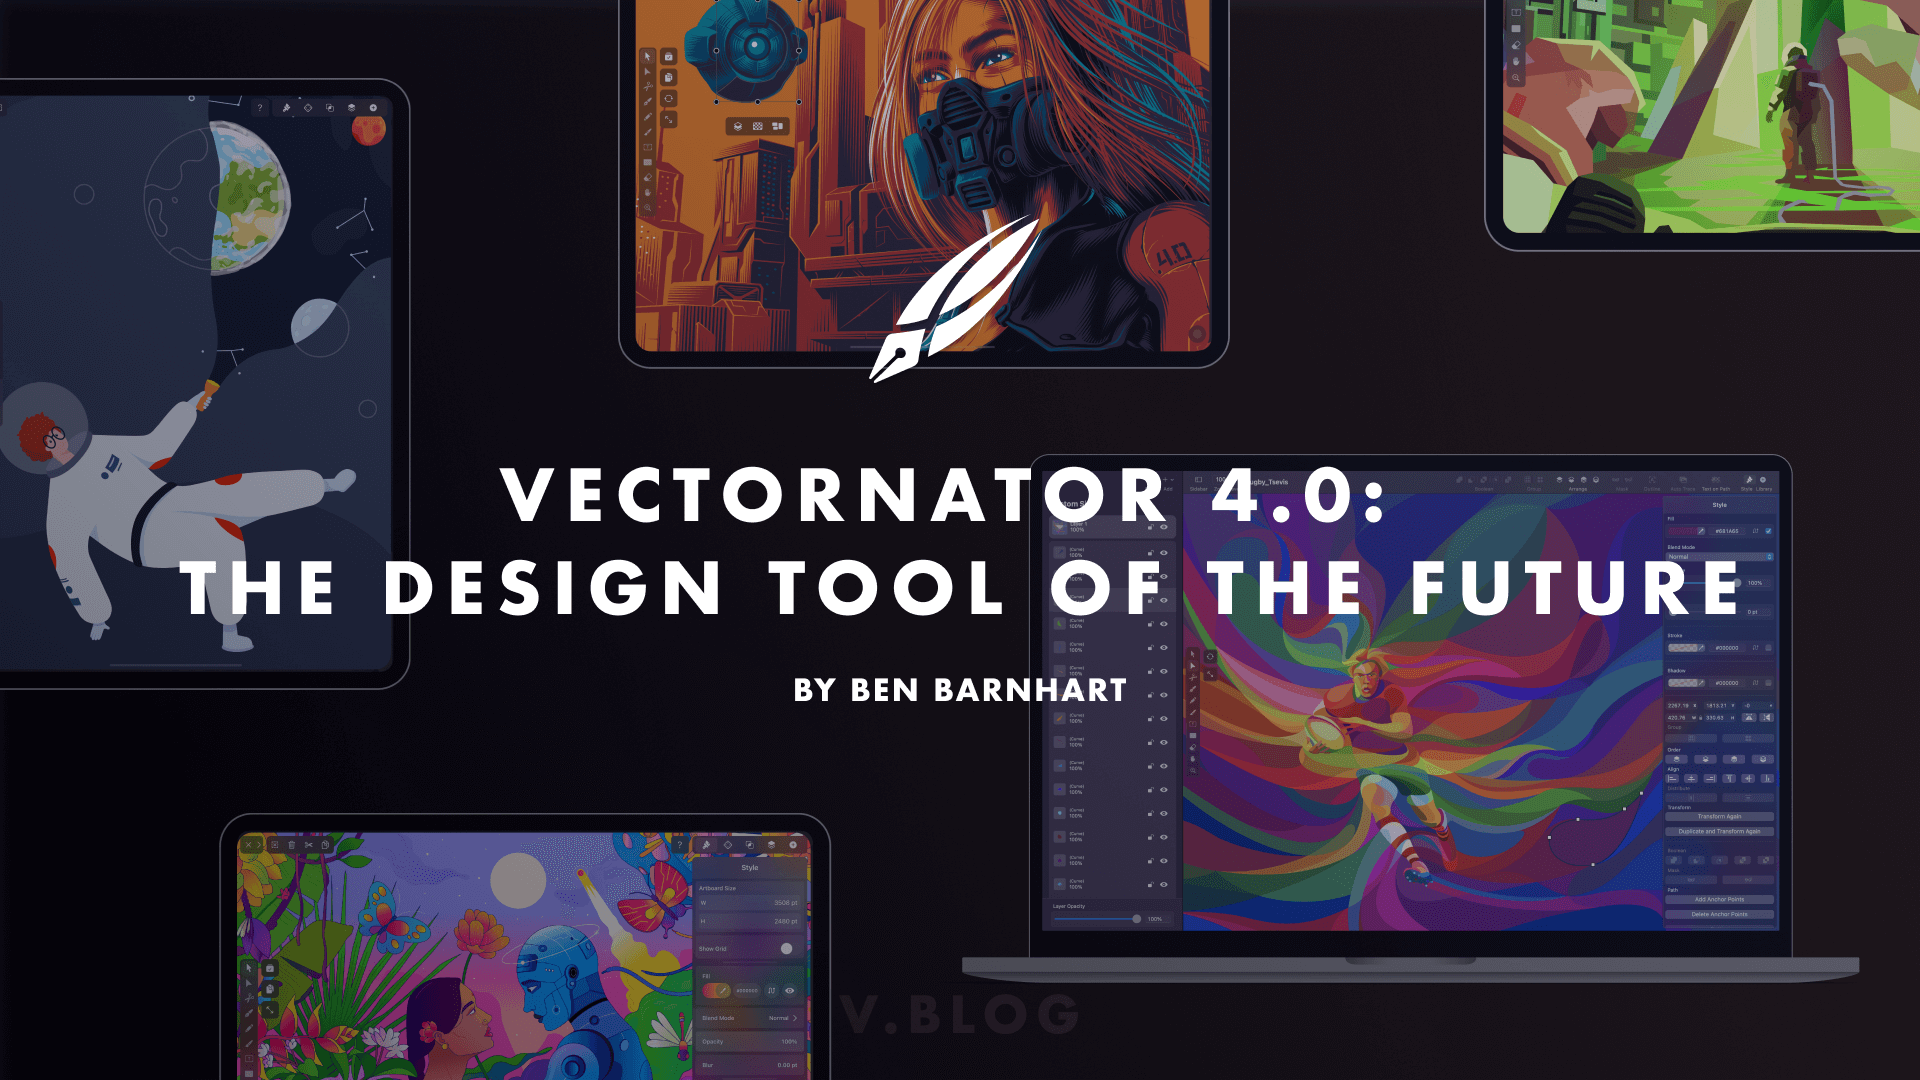 Vectornator 4.0: The Design Tool of the Future